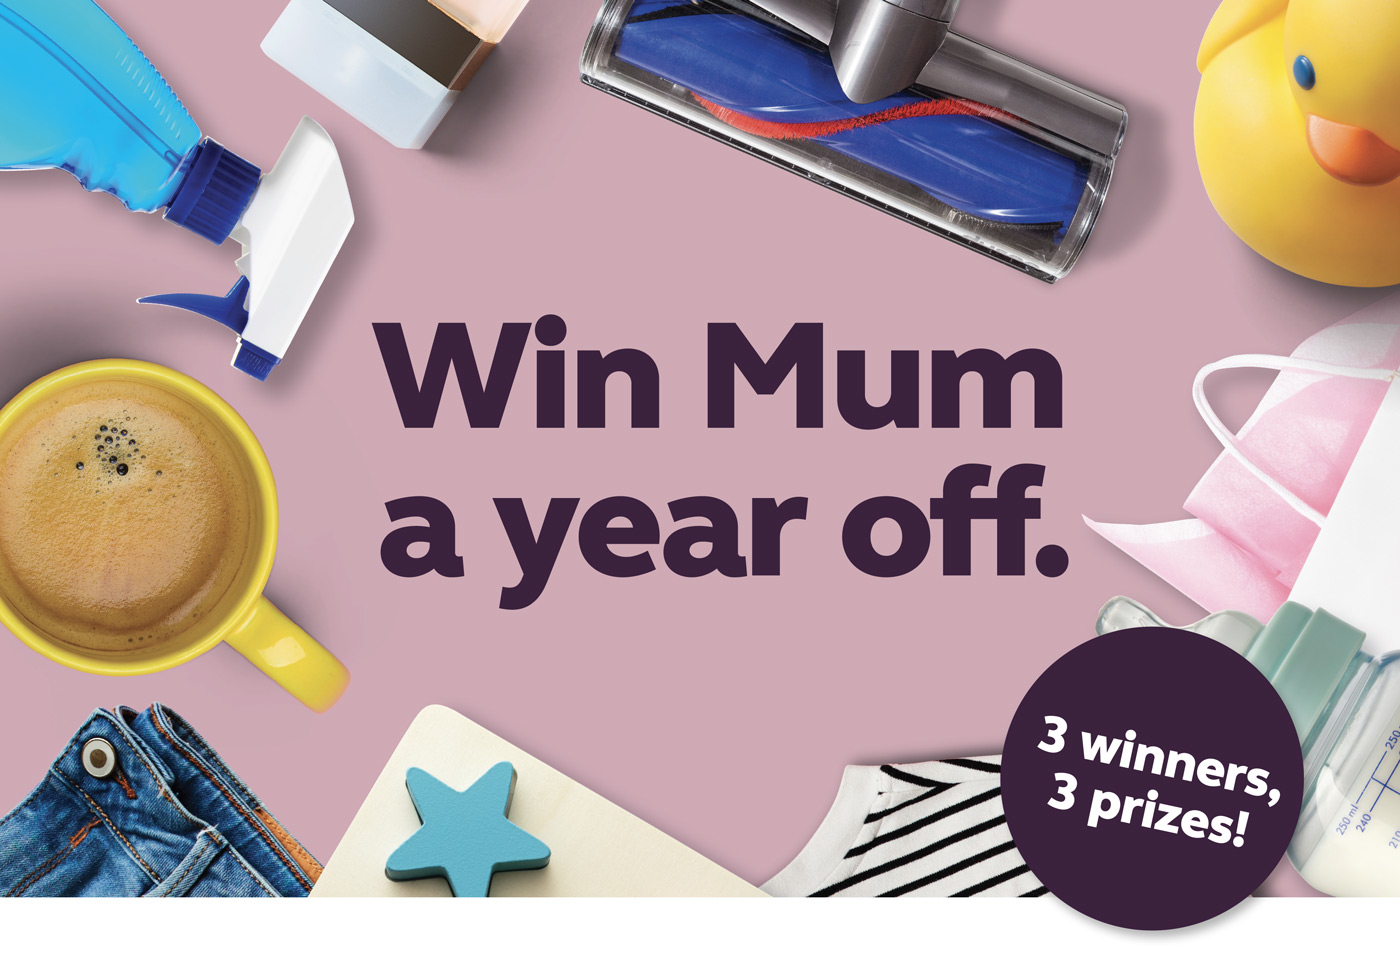 Win Mum a year off.